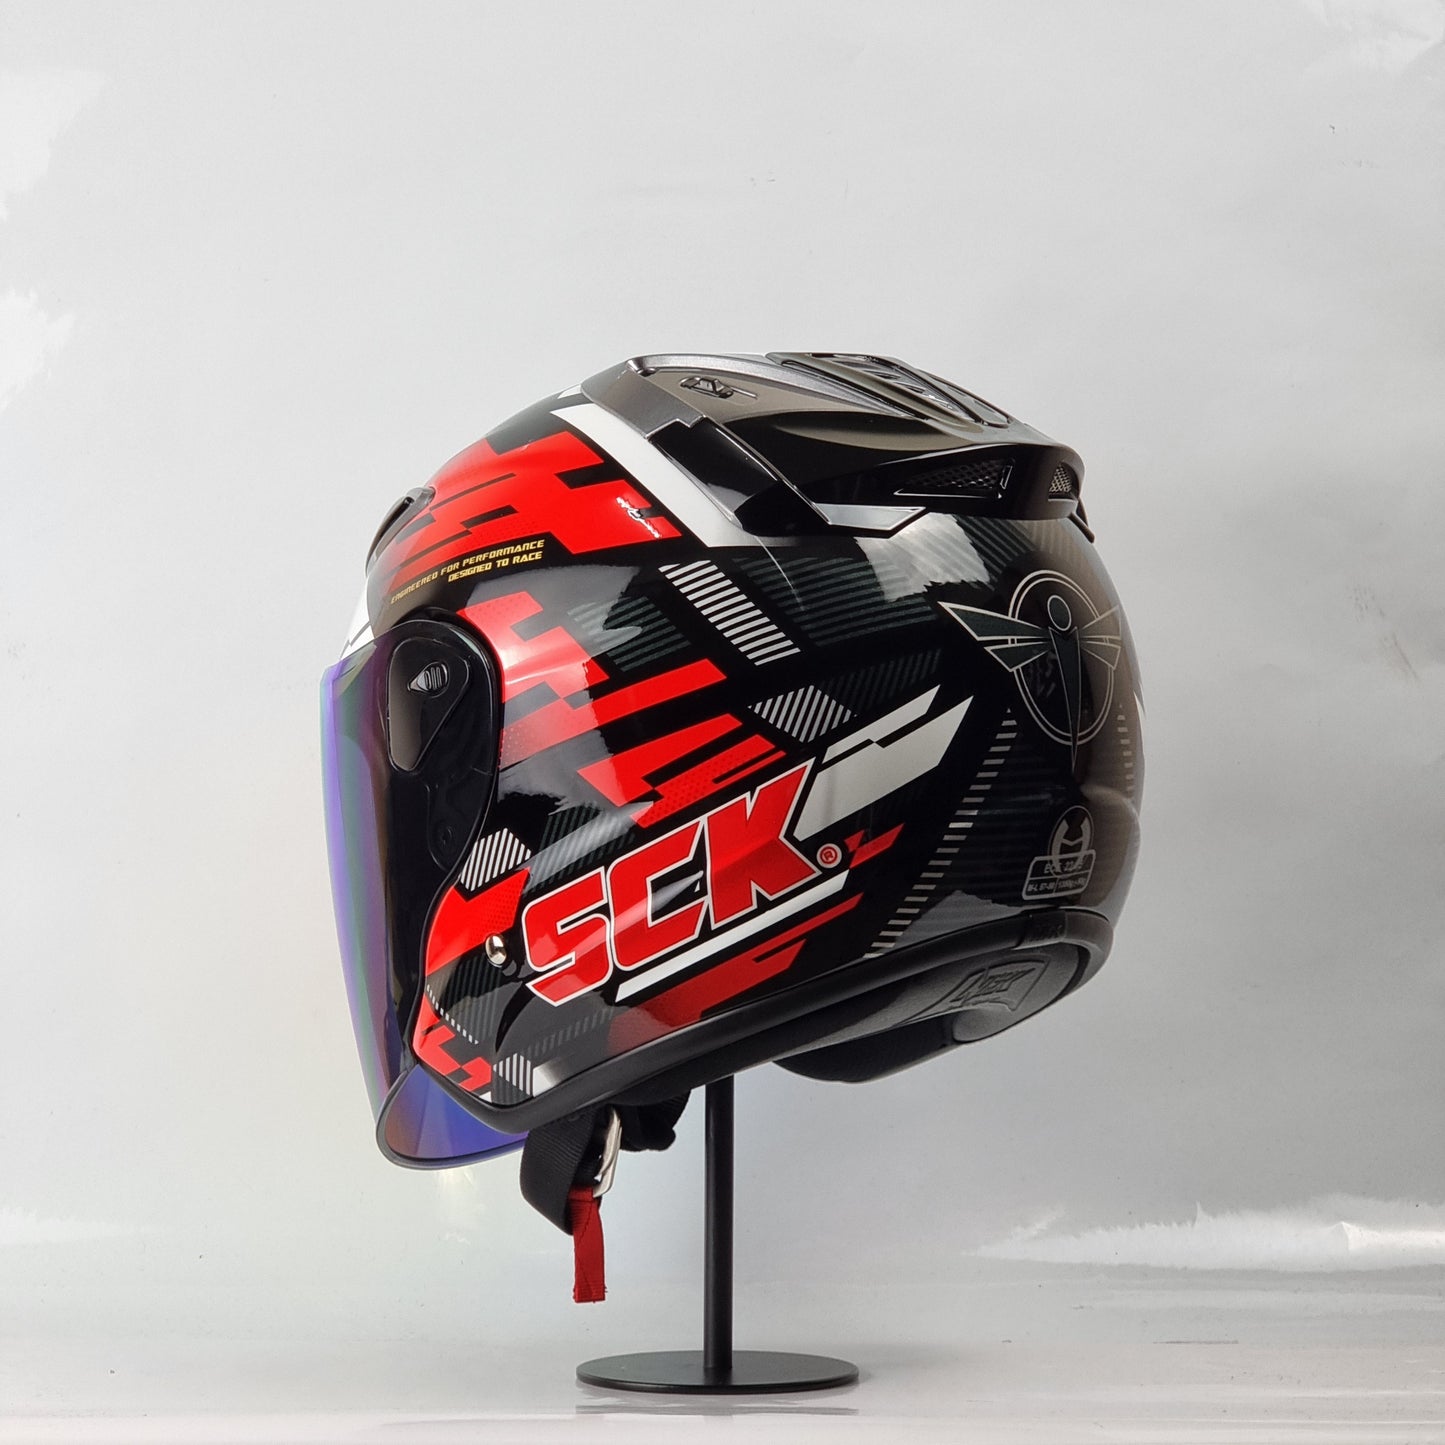 NHK Helmet R6 v2 SCK (Black/Red Glossy)